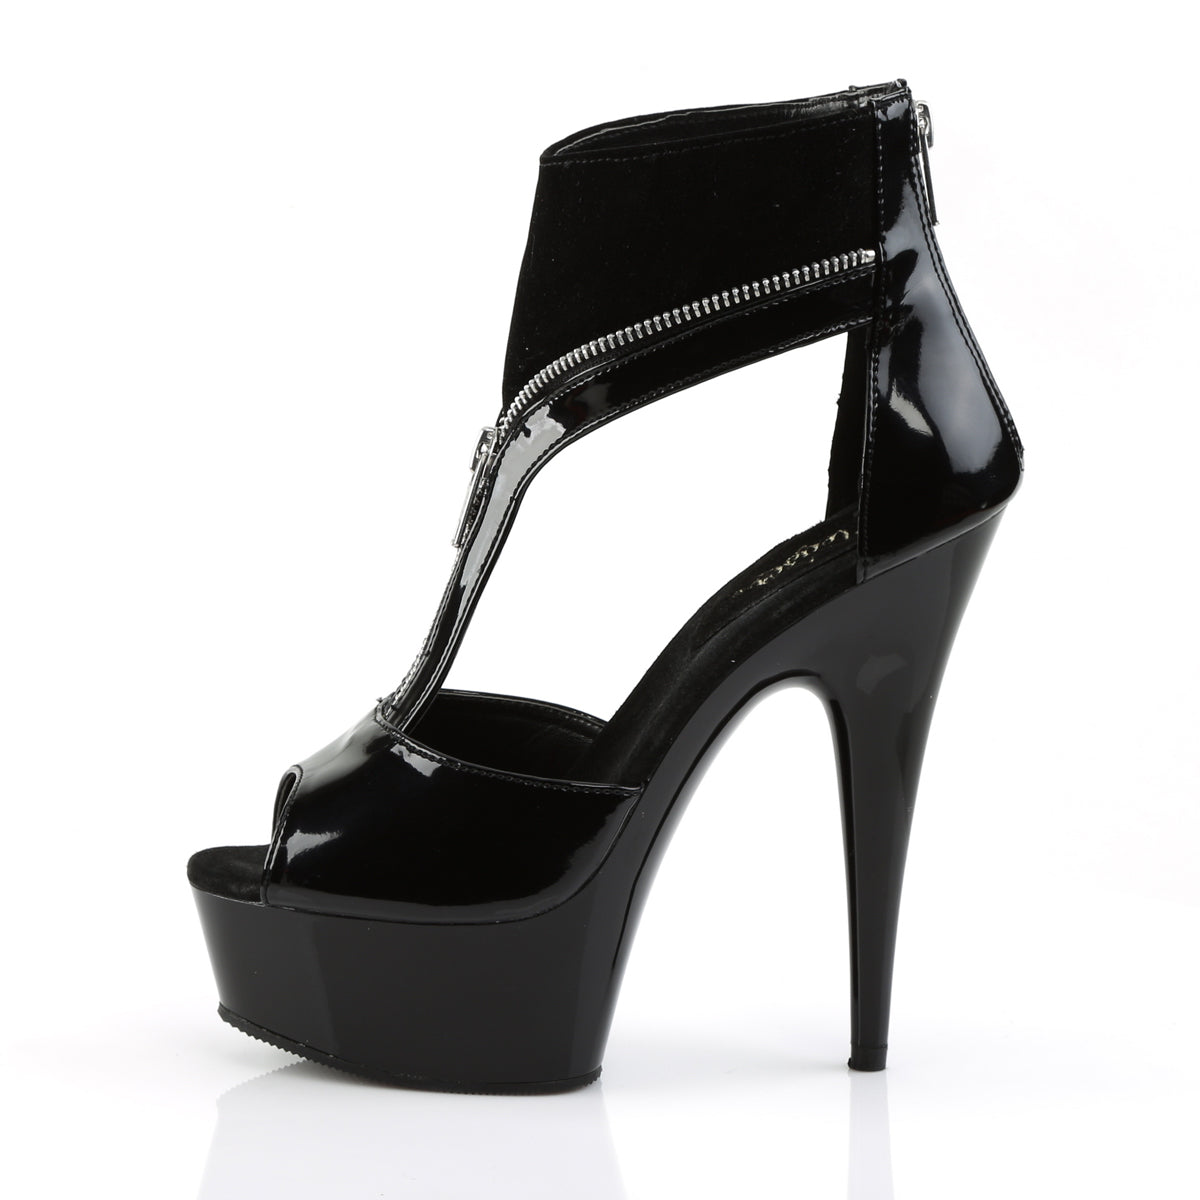 DELIGHT-690 Pleaser 6 Inch Heel Black Pole Dancing Platforms-Pleaser- Sexy Shoes Pole Dance Heels